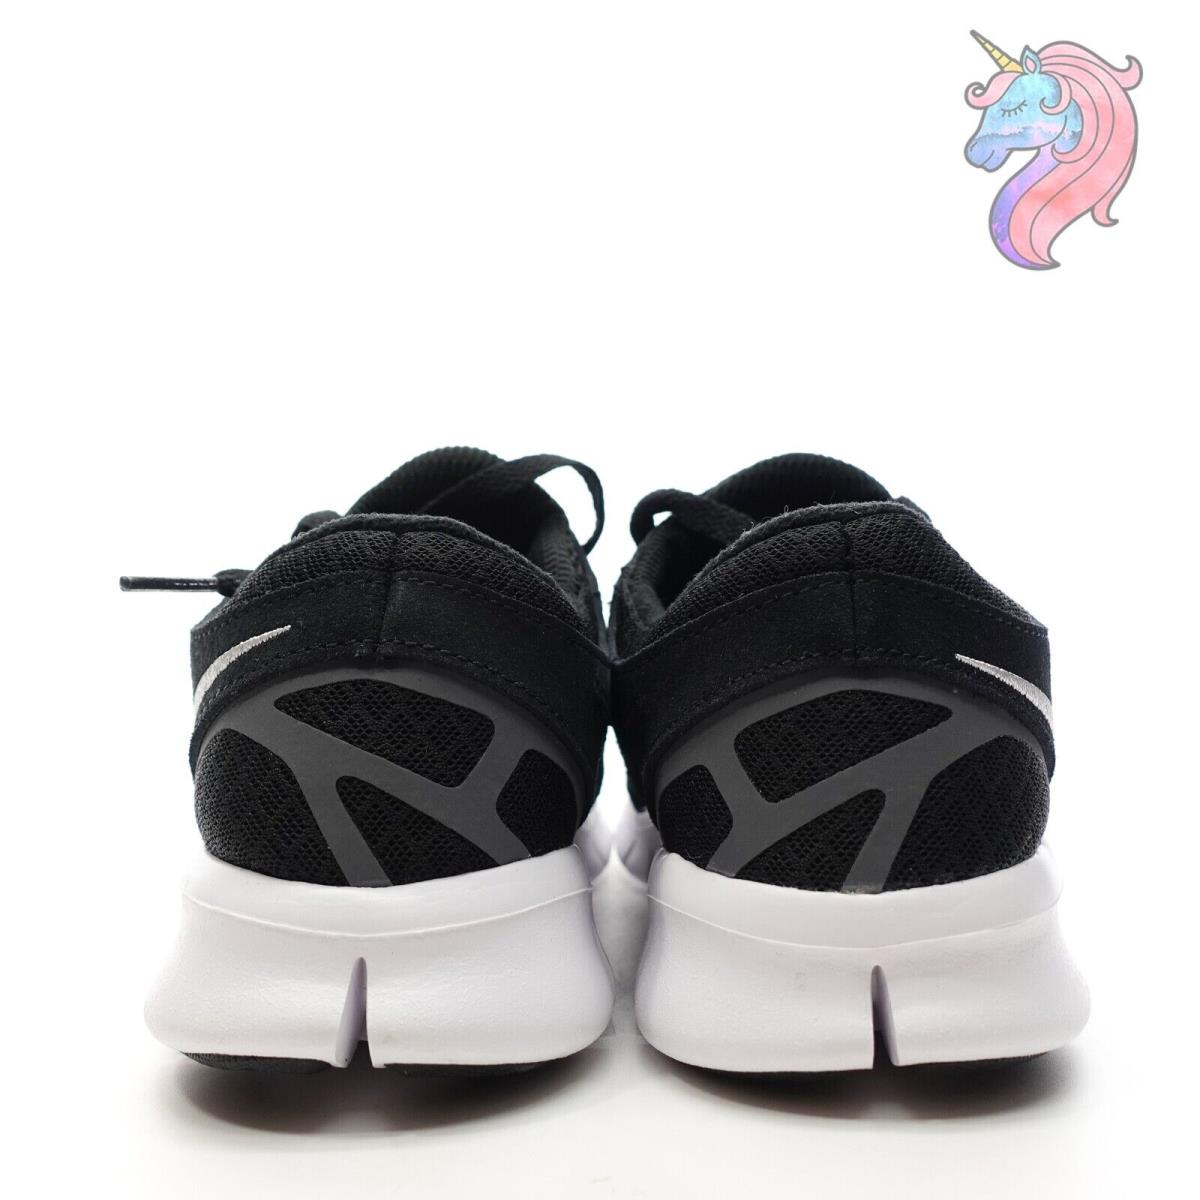 Nike shoes Free Run - Black, White 6